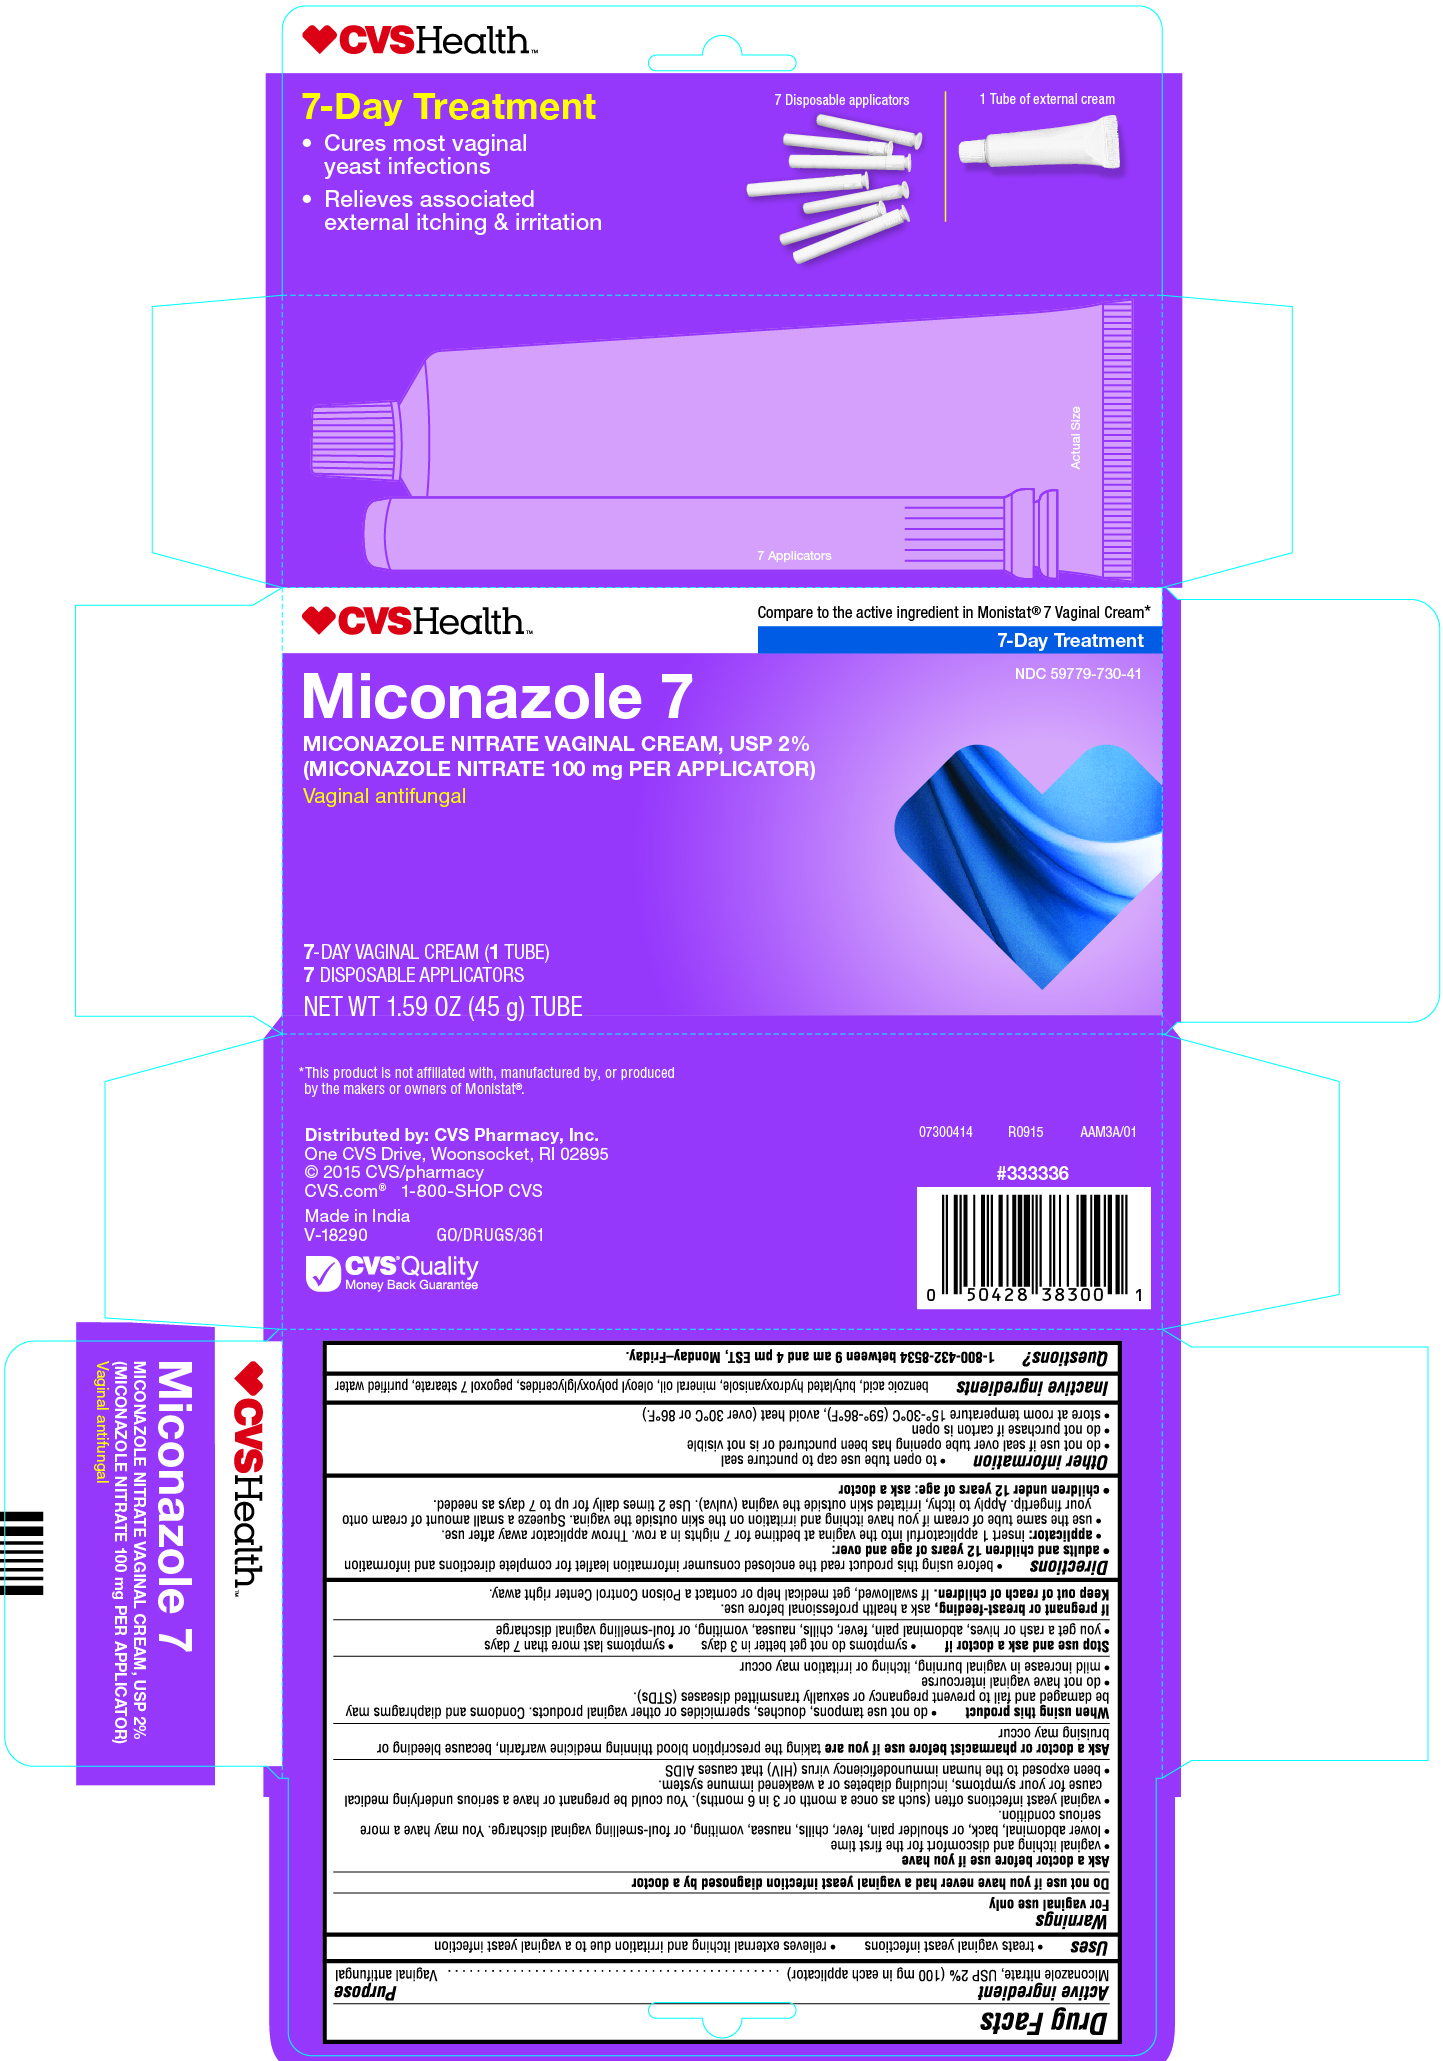 Miconazole Nitrate Vaginal Cream, USP 2%